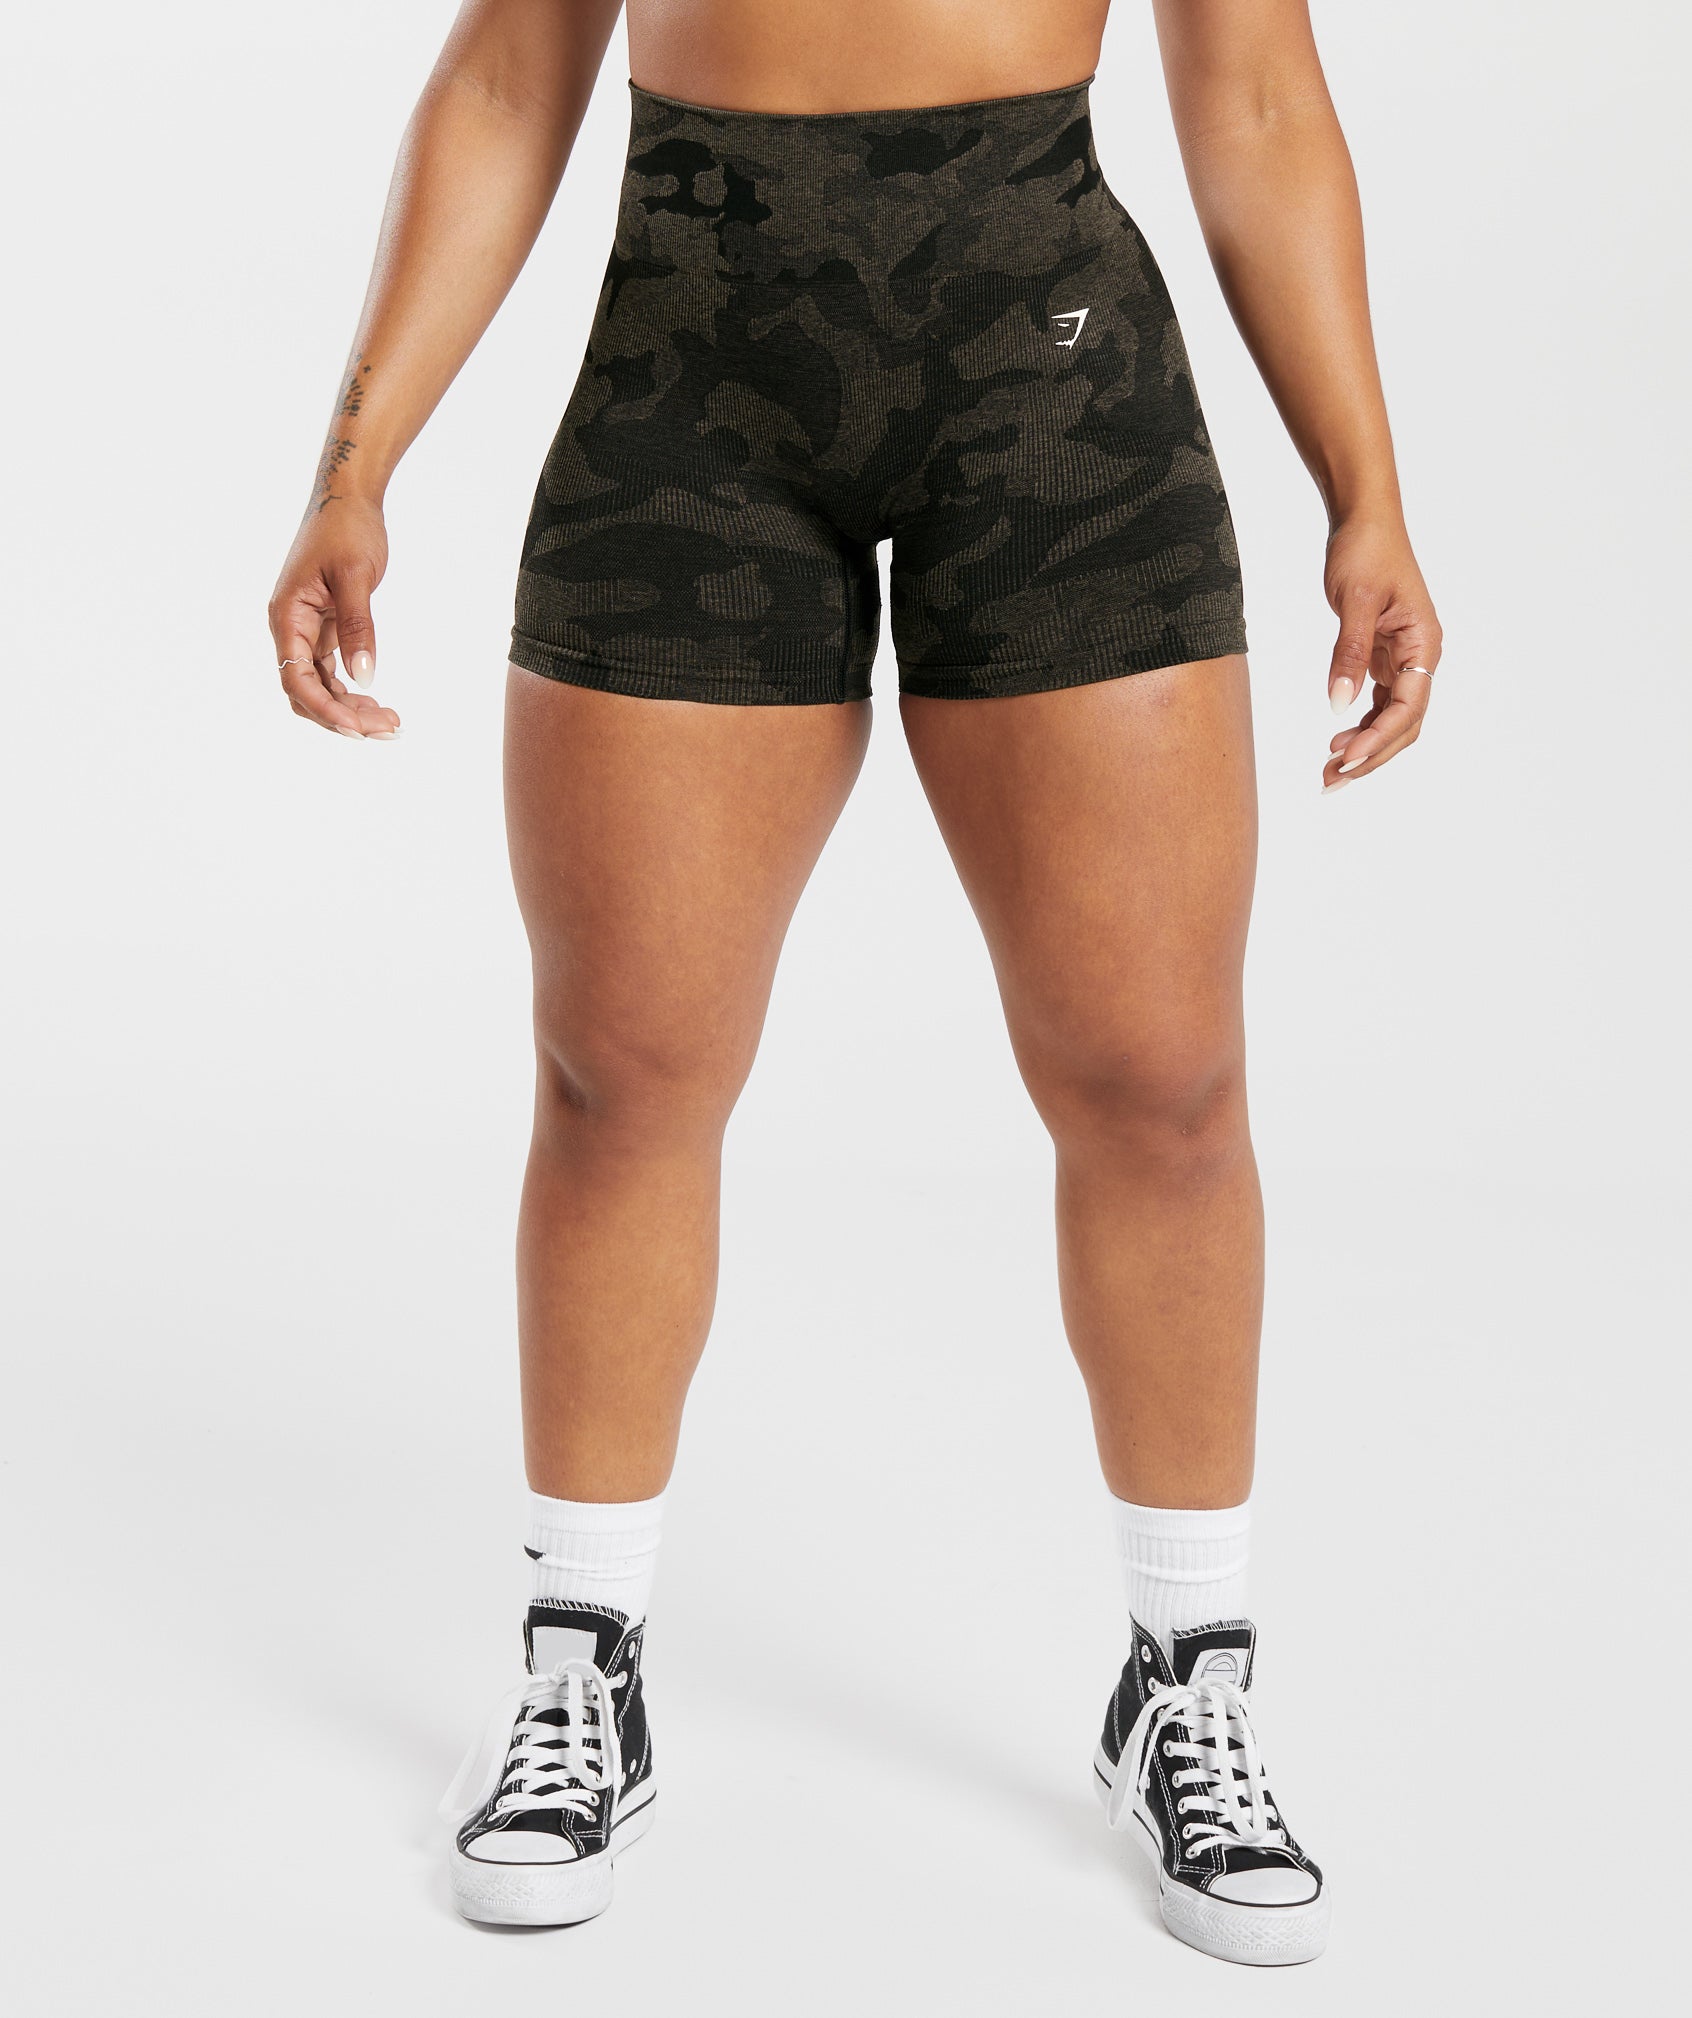 Adapt Camo Seamless Shorts in Black/Camo Brown